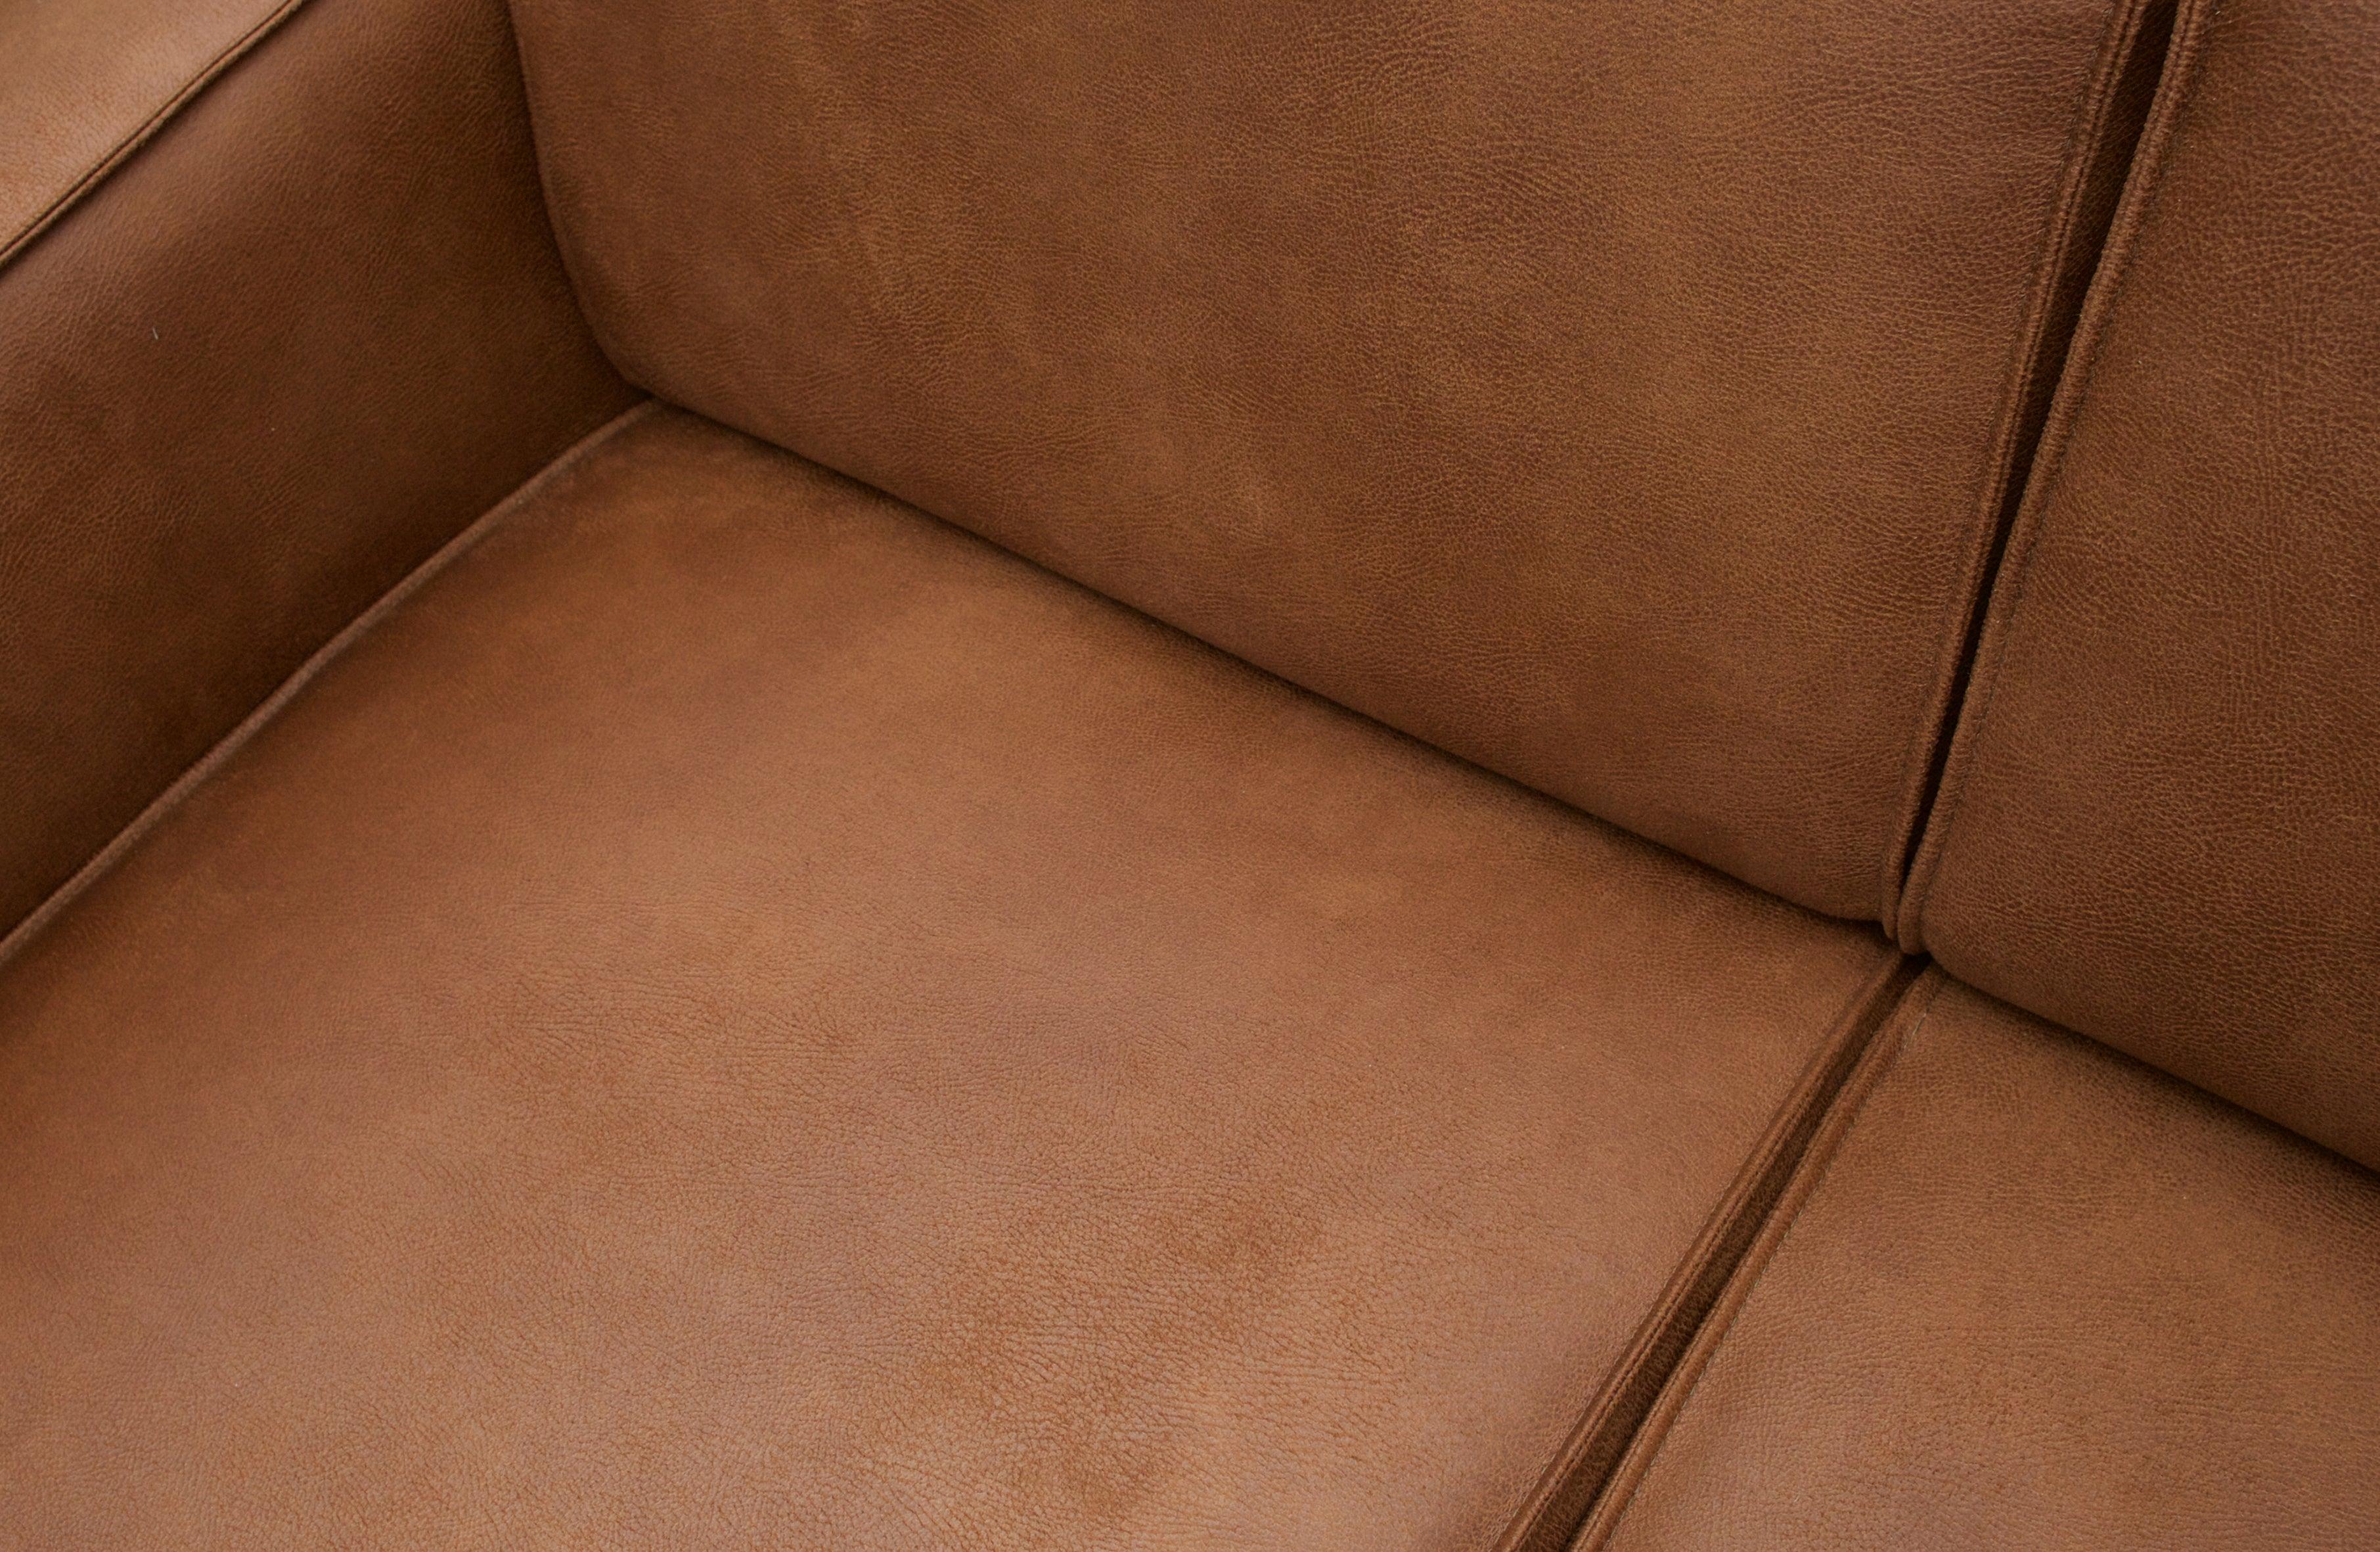 Sofa ekoskóra 4-osobowa STATEMENT koniakowy Be Pure    Eye on Design